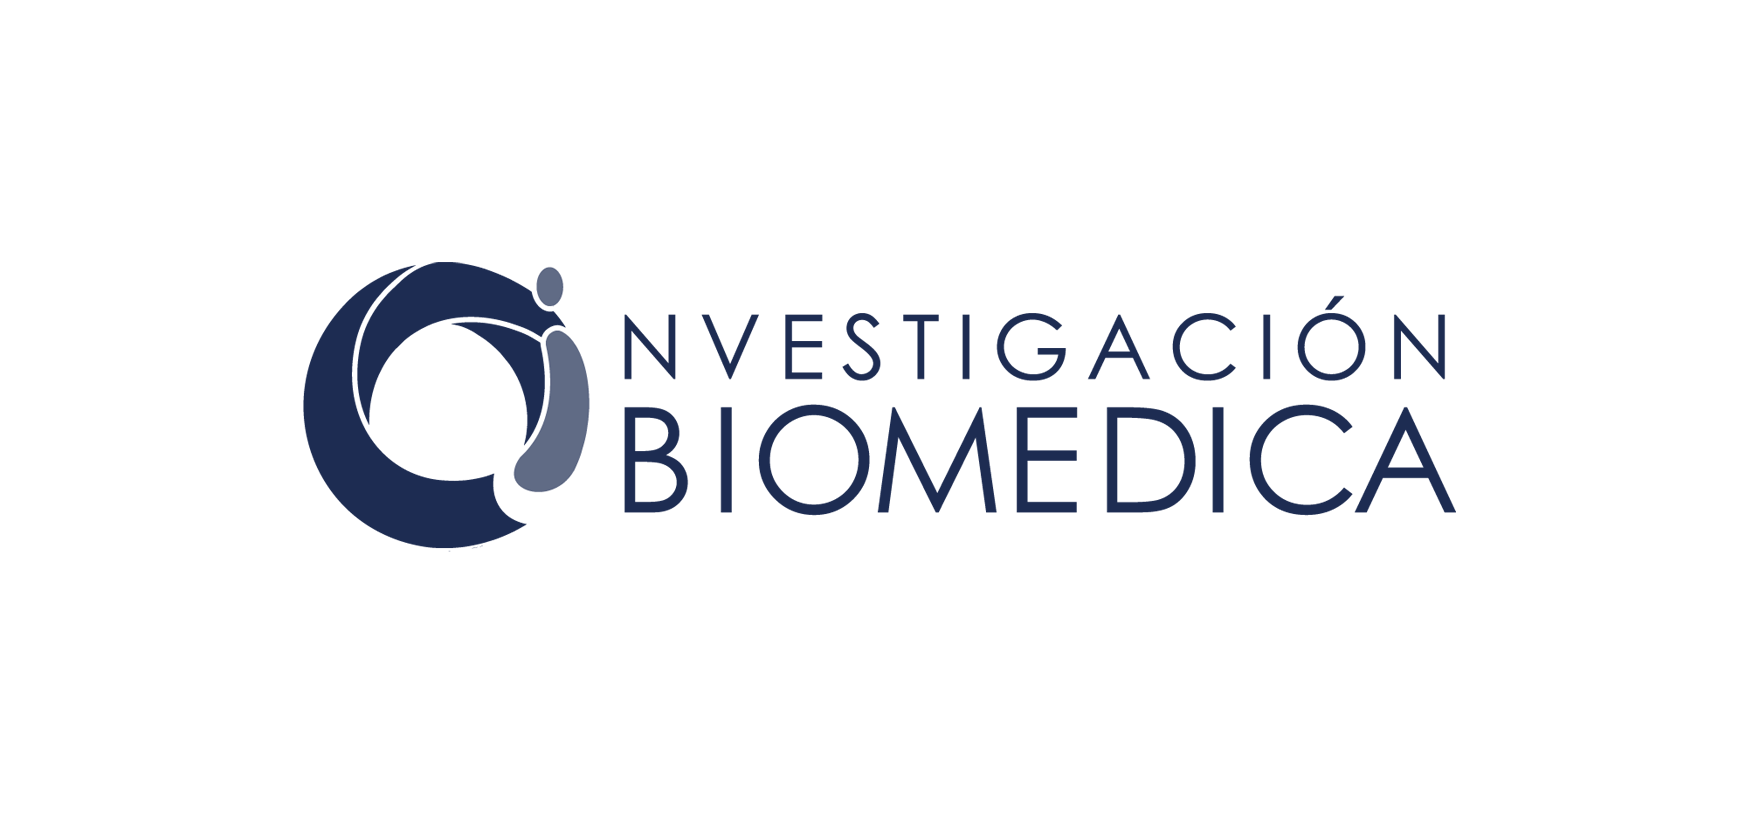 Ibiomed logo